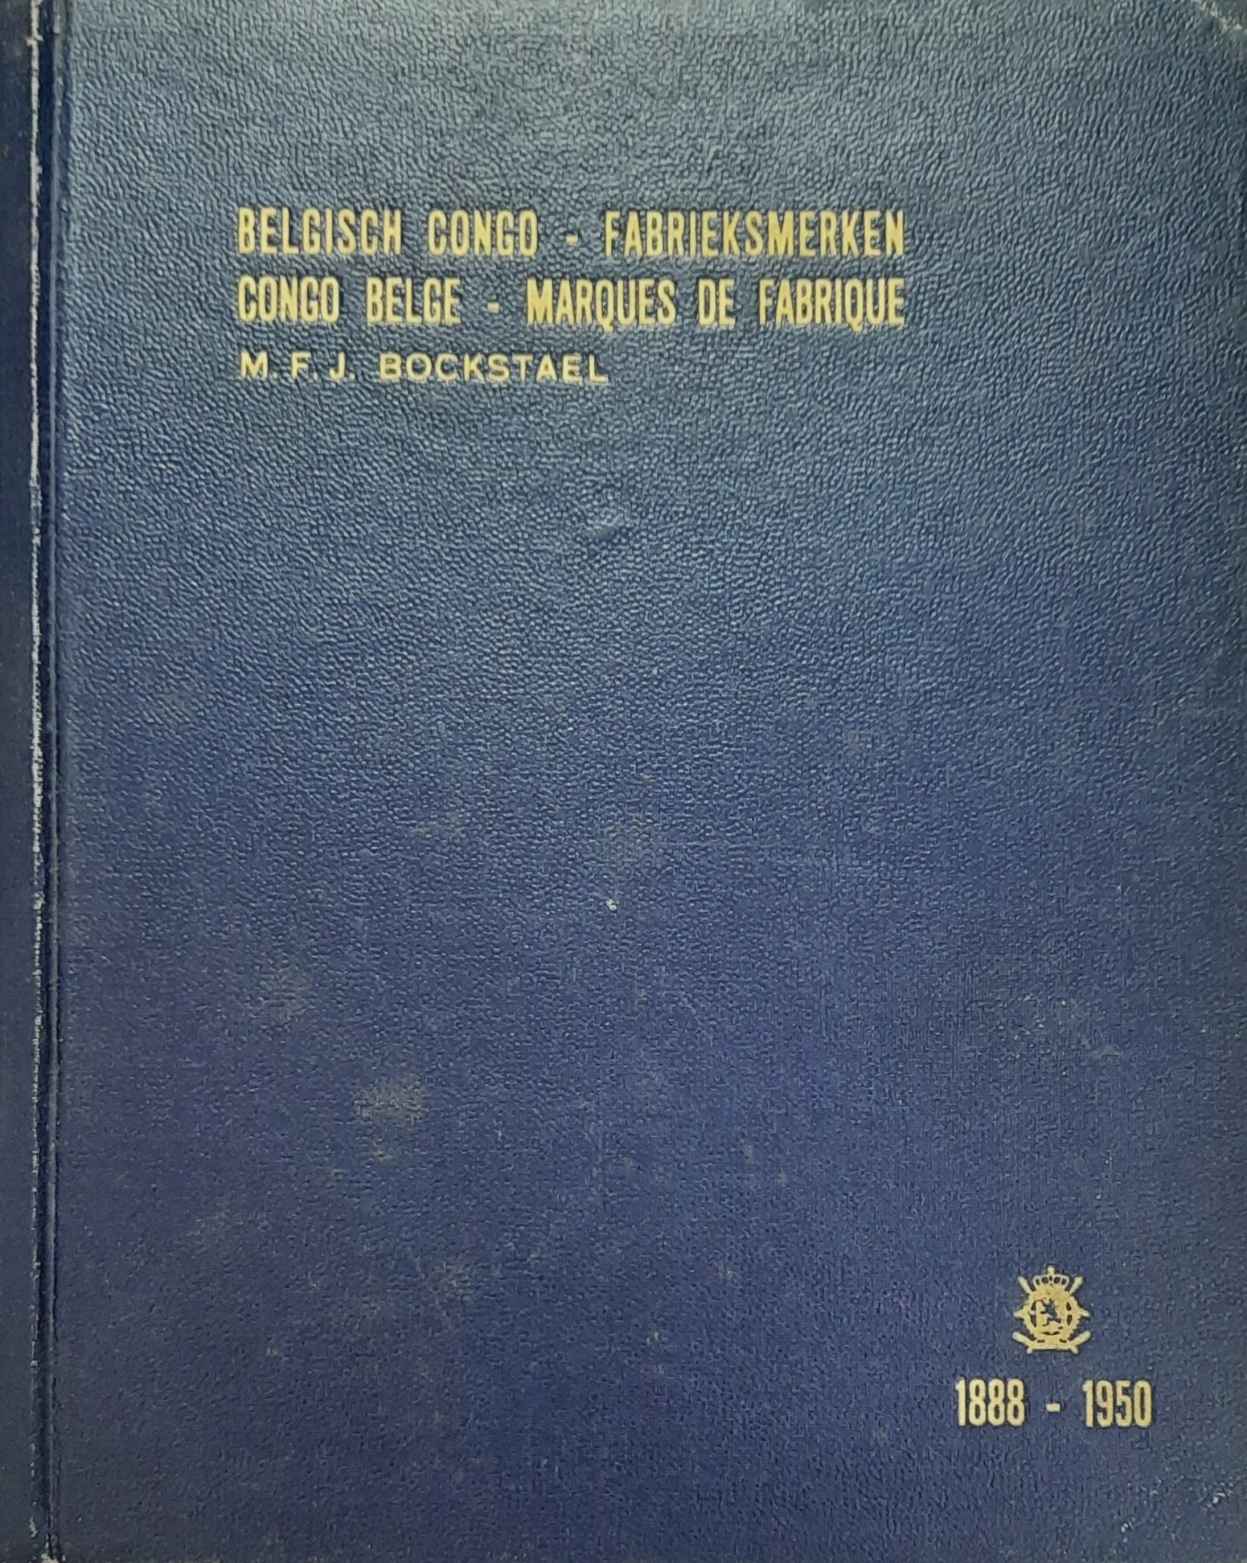 Book cover 62806: BOCKSTAEL M.F.J., PETILLON (Préface) | Belgisch Congo - Fabrieksmerken - Congo Belge - Marques de Fabrique - 1888-1950